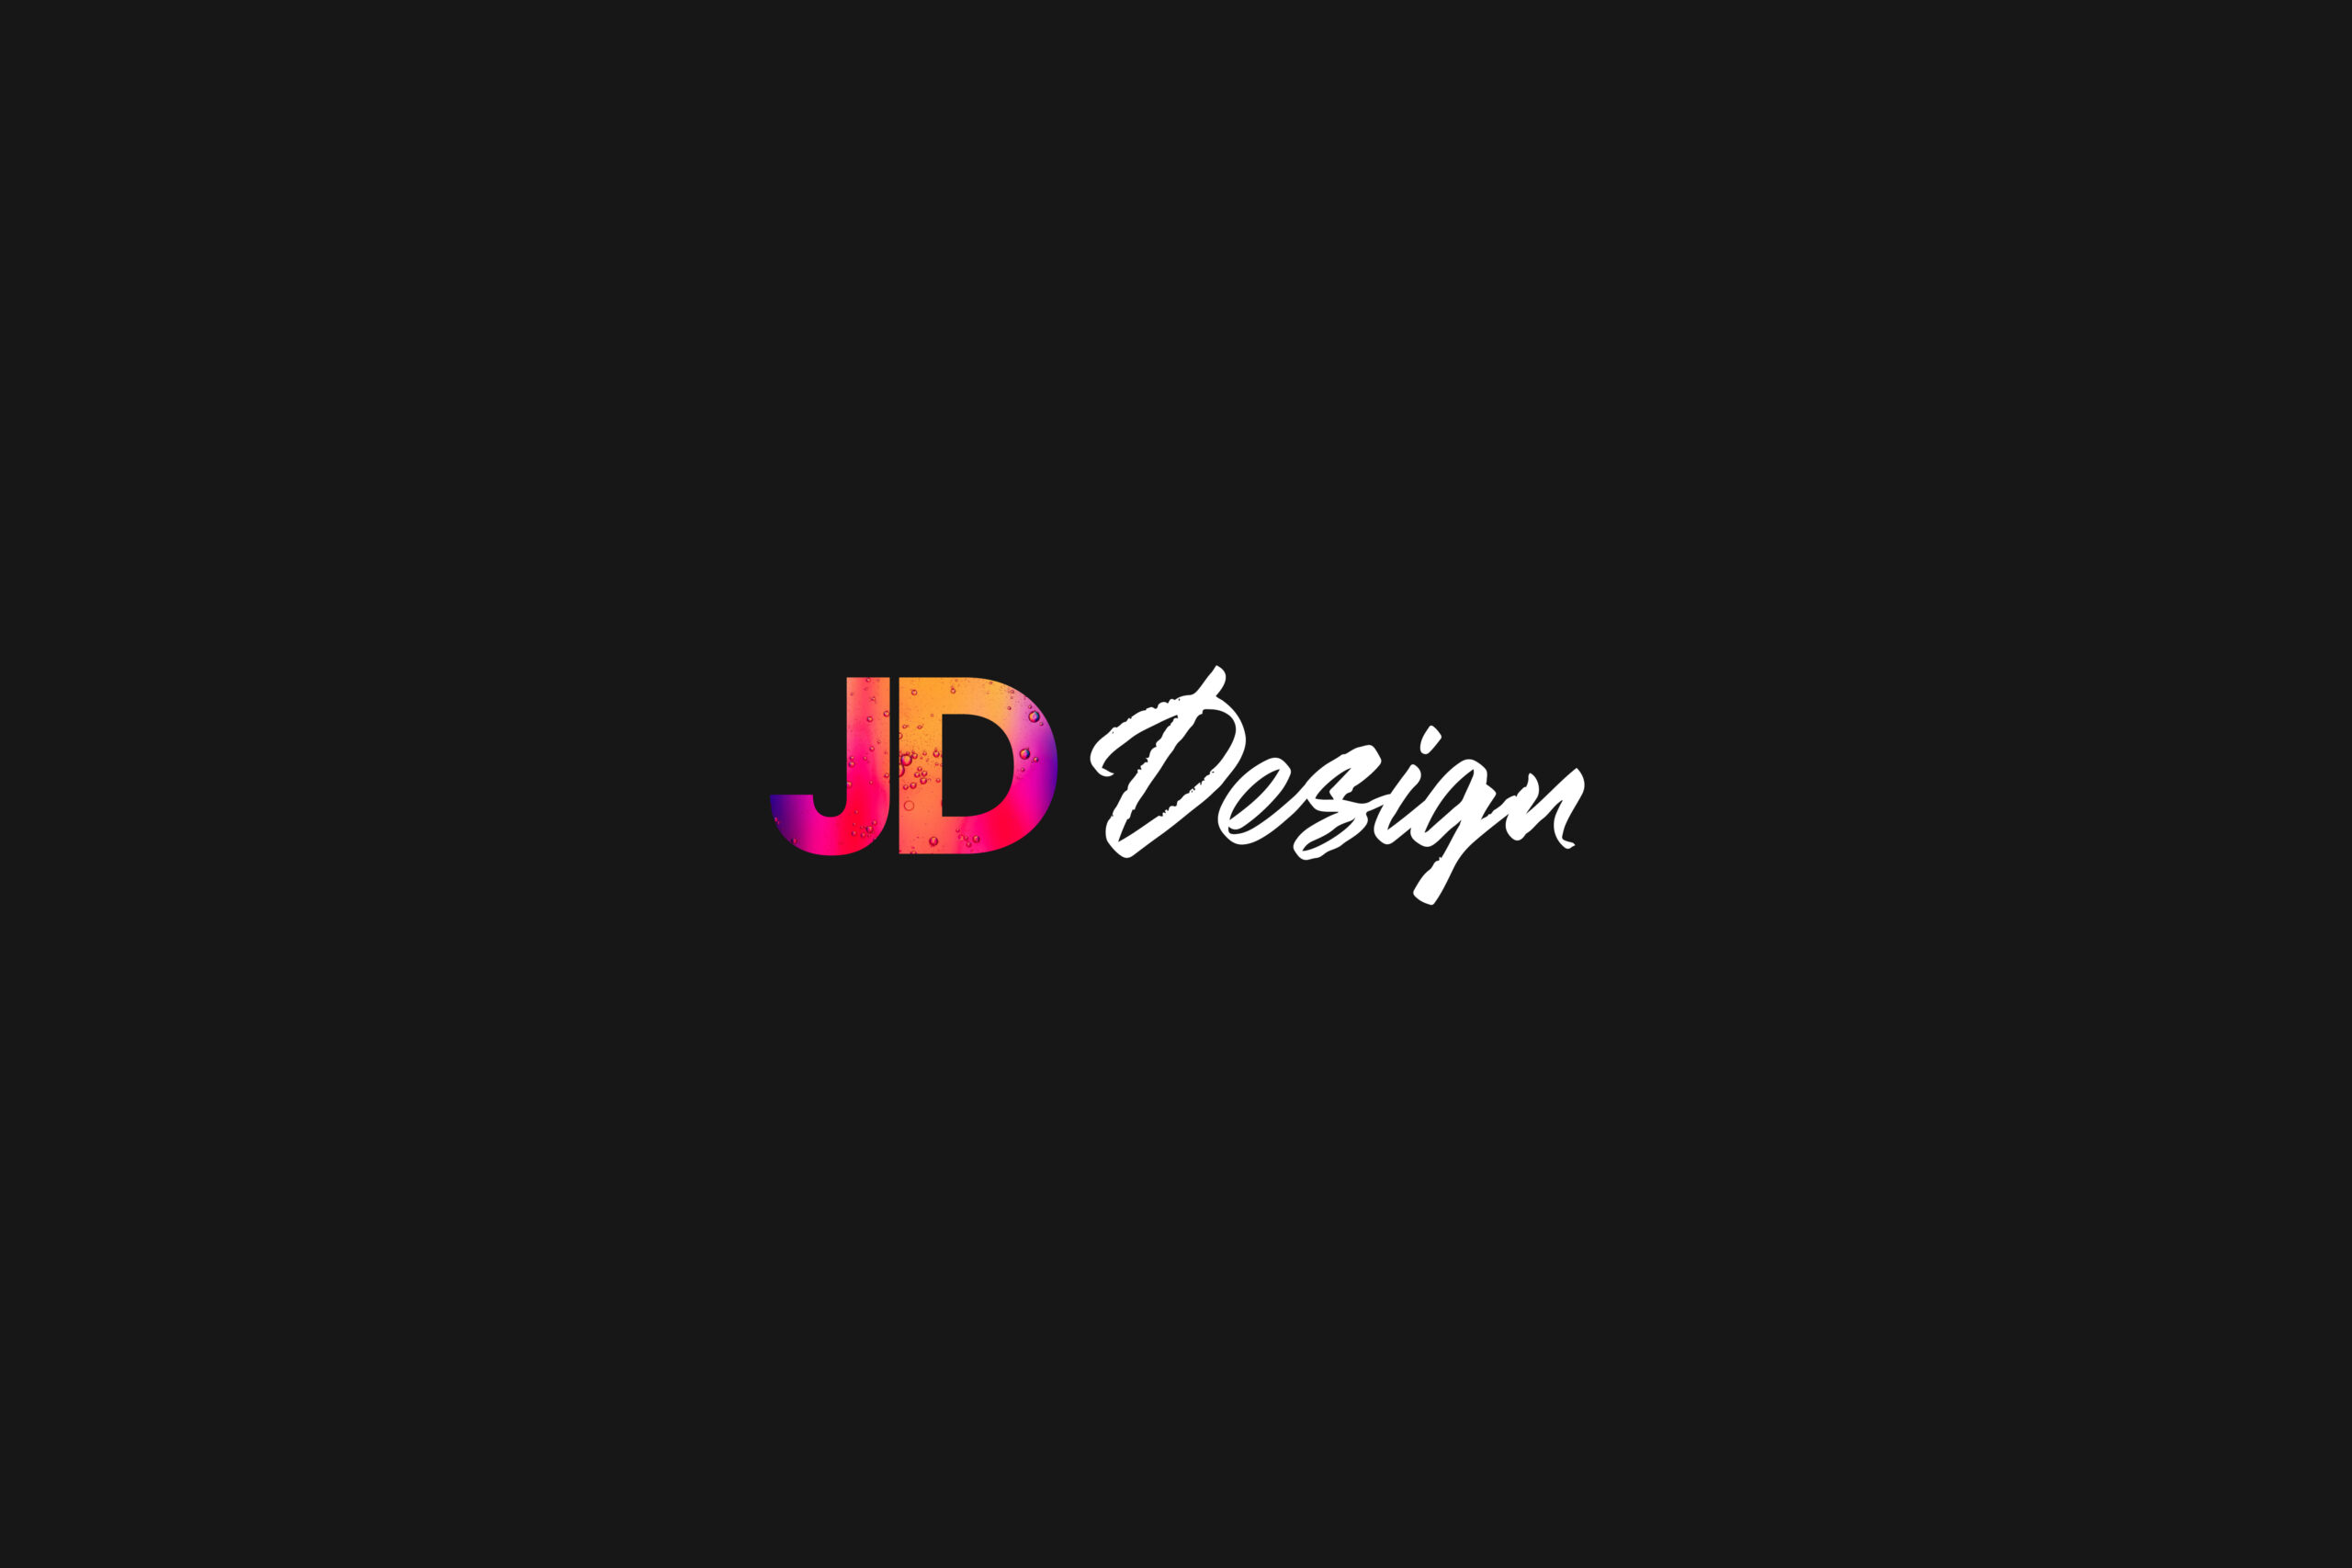 JD Design - MyListing Theme Neo CSS Pack